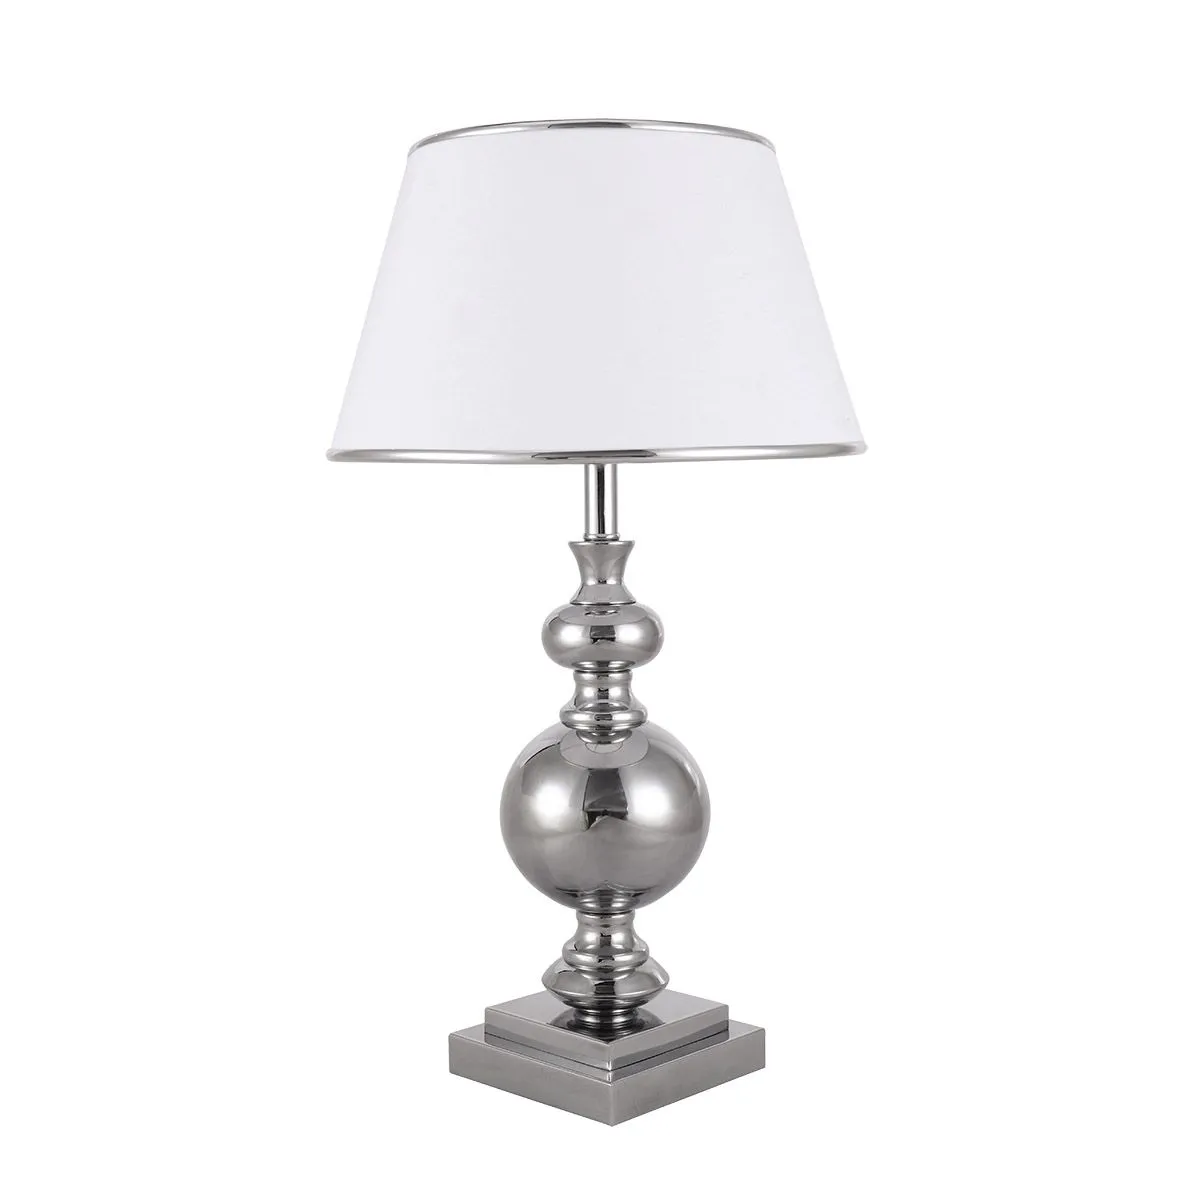 Letto, klasyczna lampka biurkowa i gabinetowa, chromowana, E27, TL-1825-1-CH